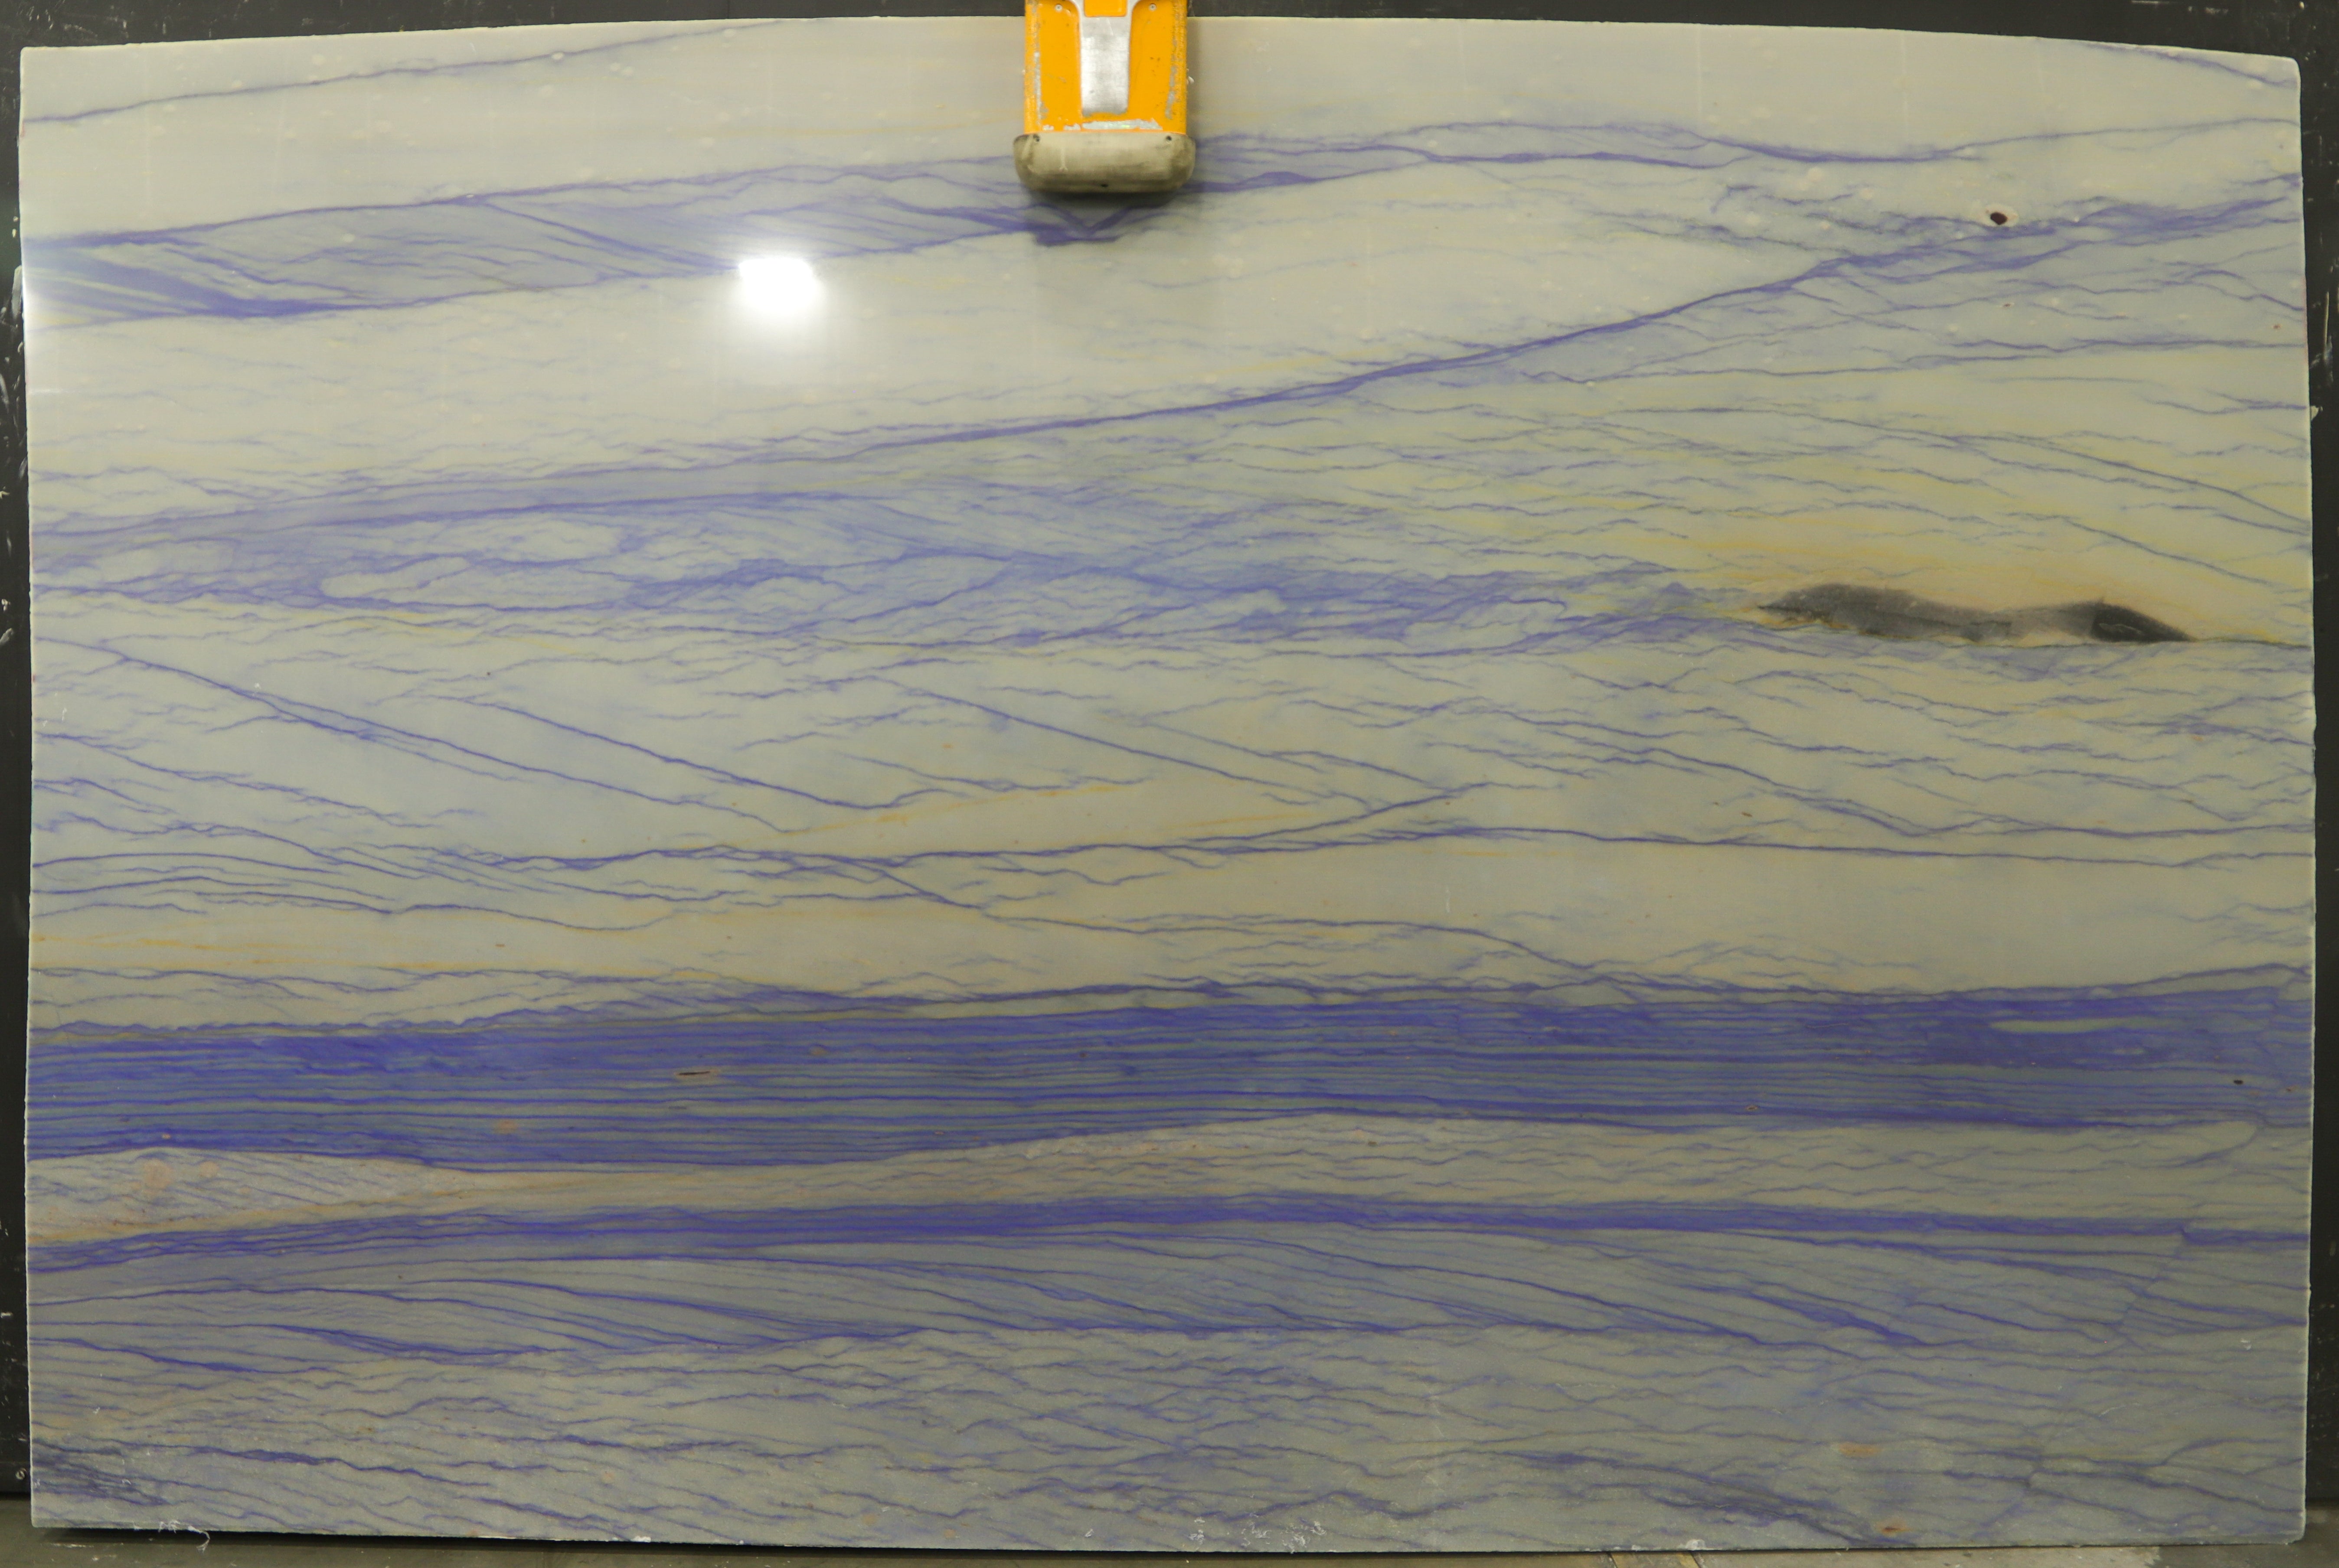  Azul Macaubas A1 Select Quartzite Slab 3/4  Polished Stone - 11162#15 -  72x109 